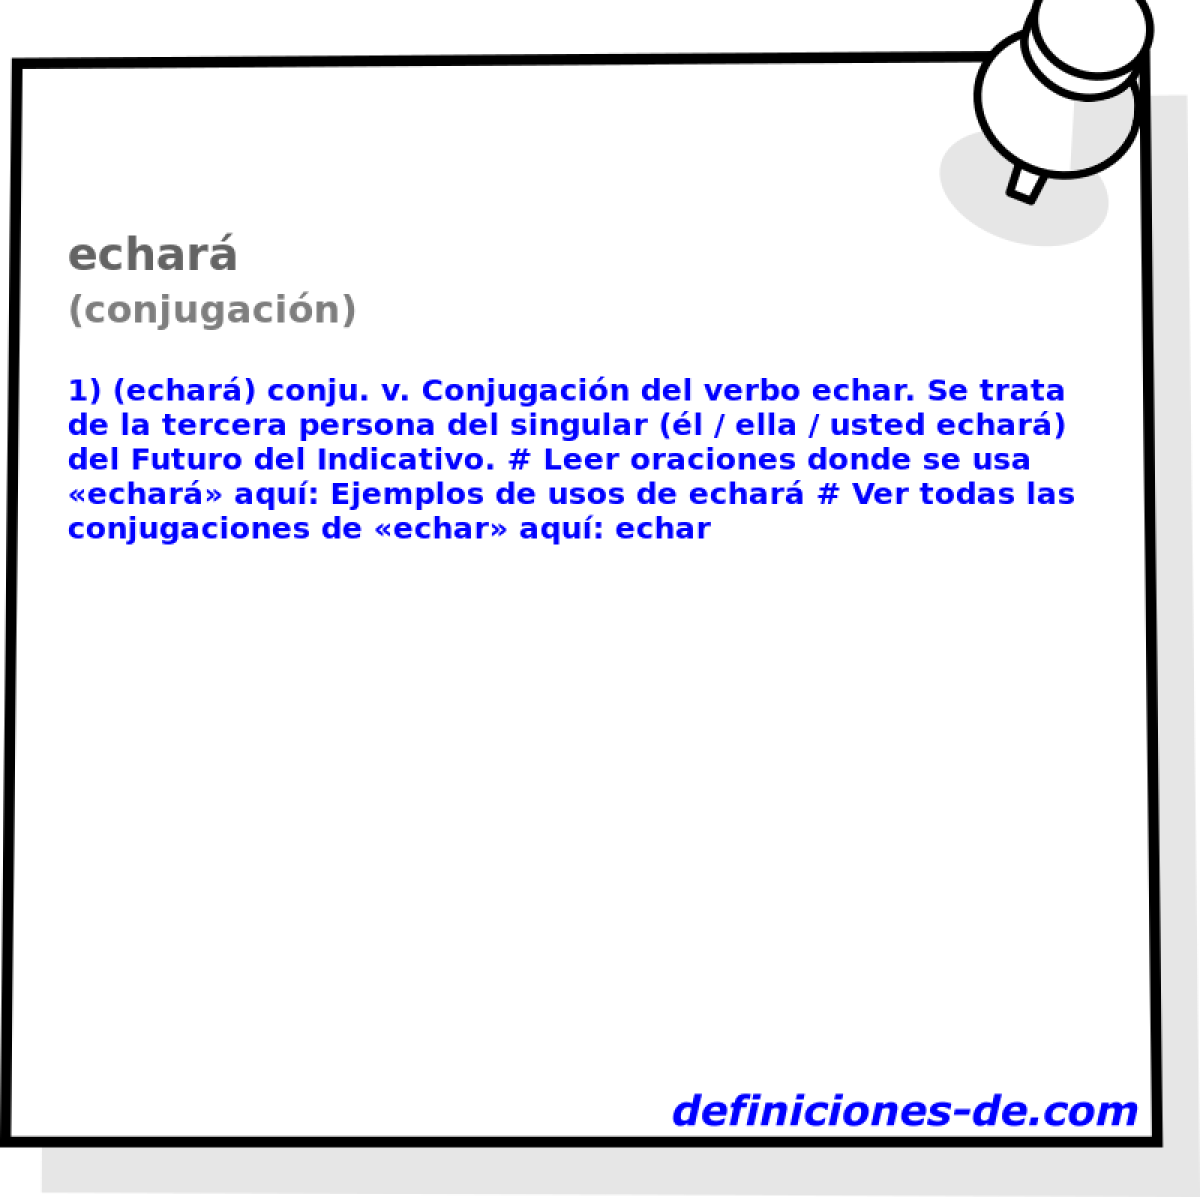 echar (conjugacin)